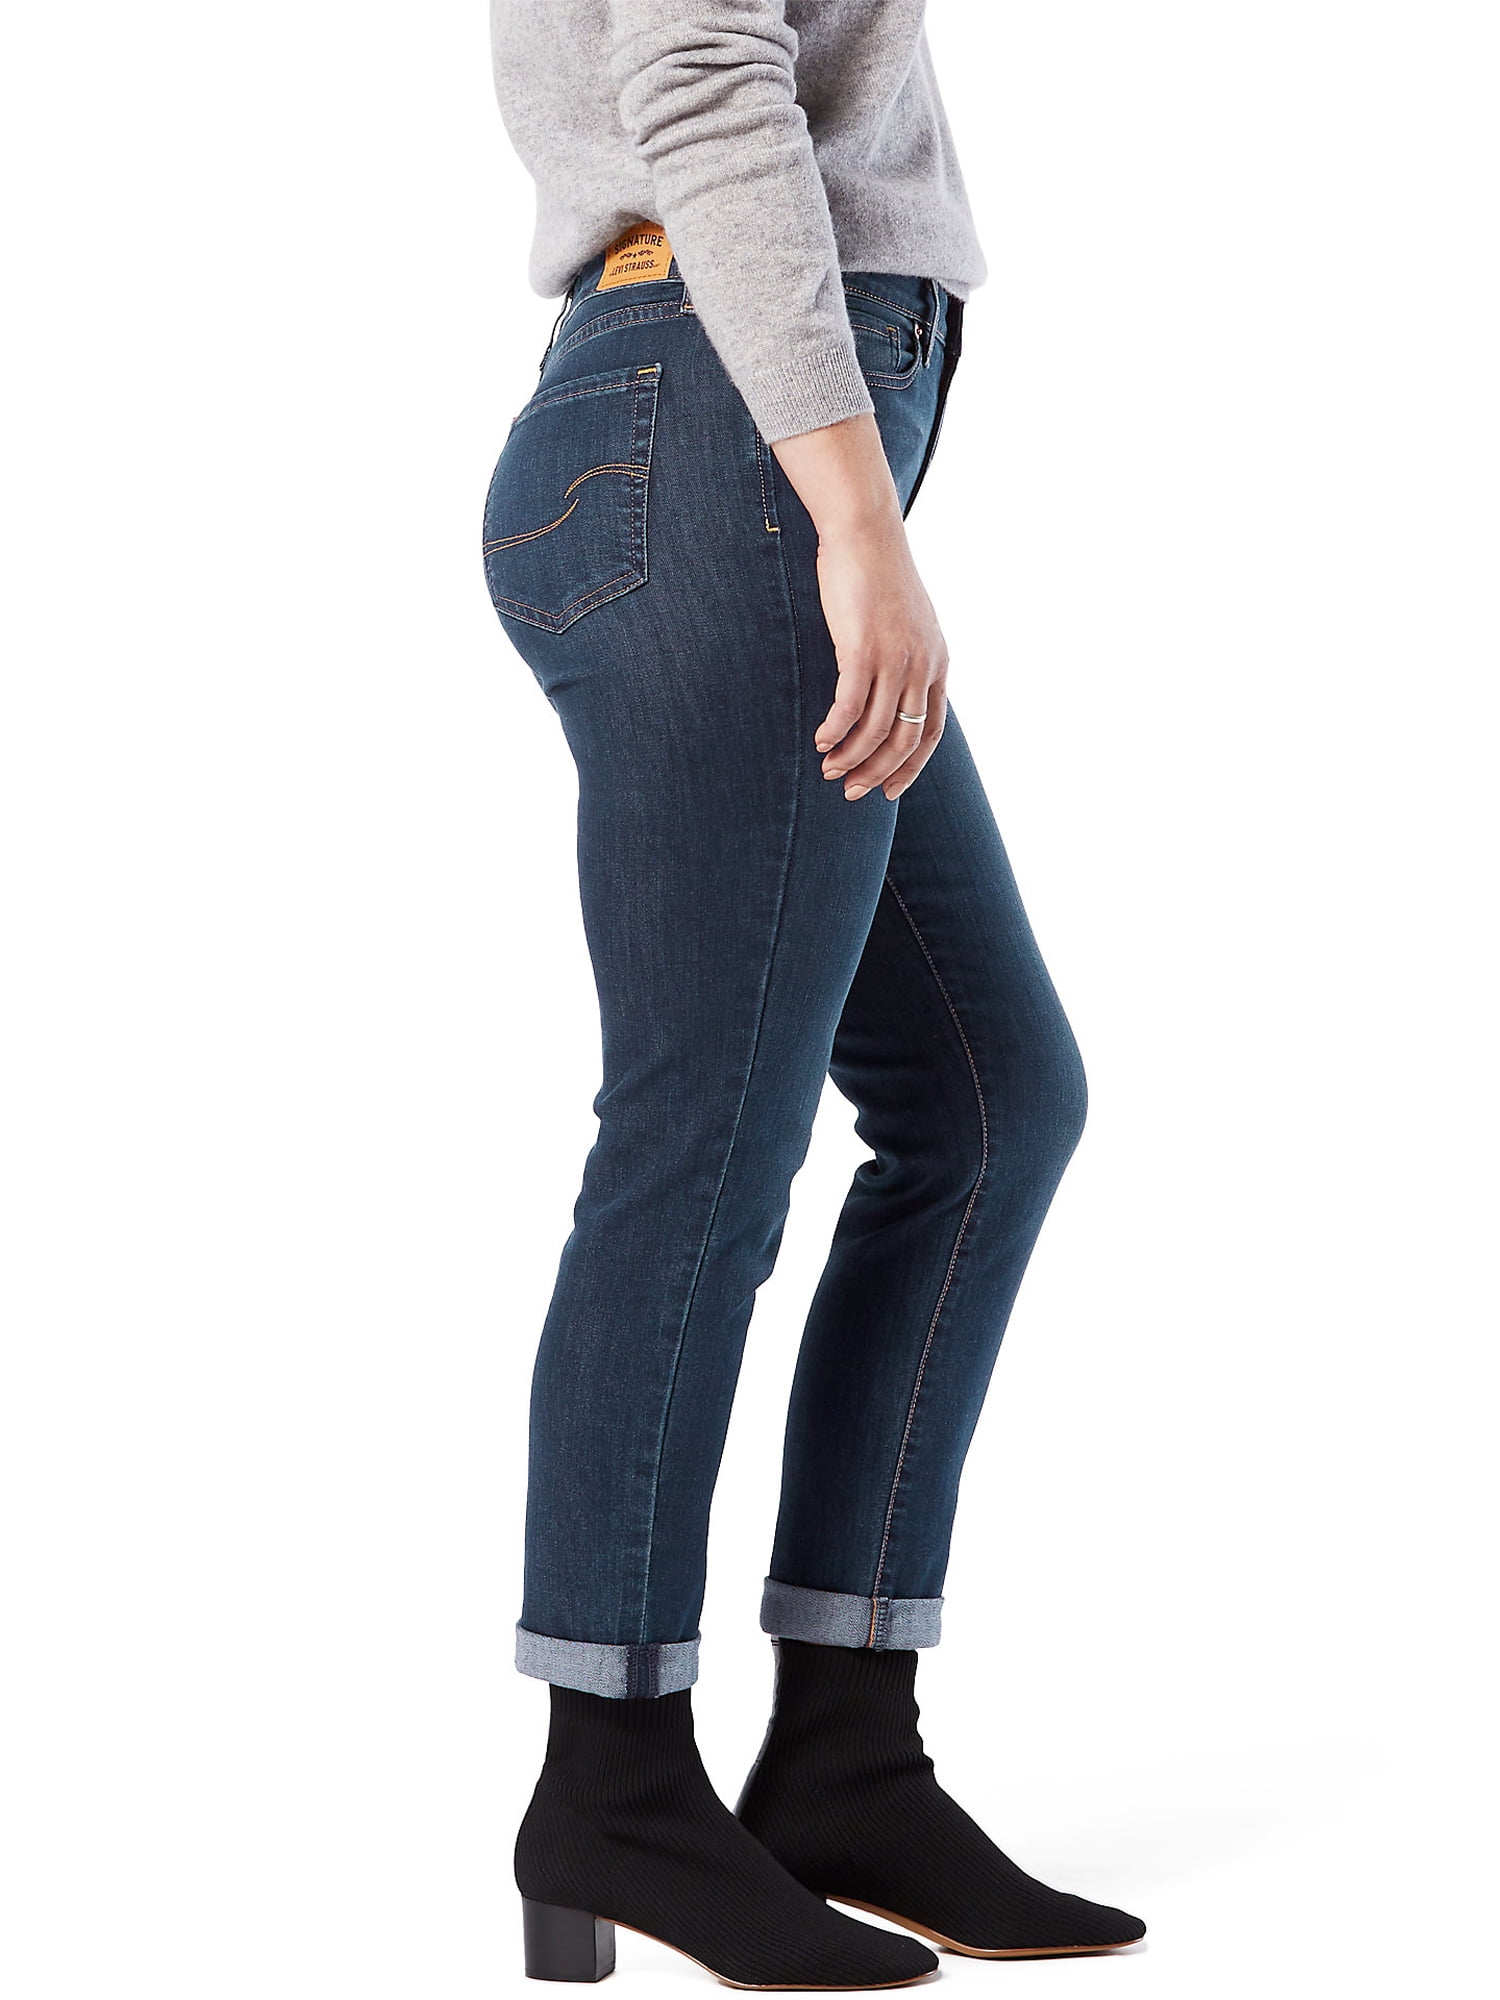 Signature by Levi Strauss & Co. Women's Mid Rise Slim Fit Boyfriend Jeans -  